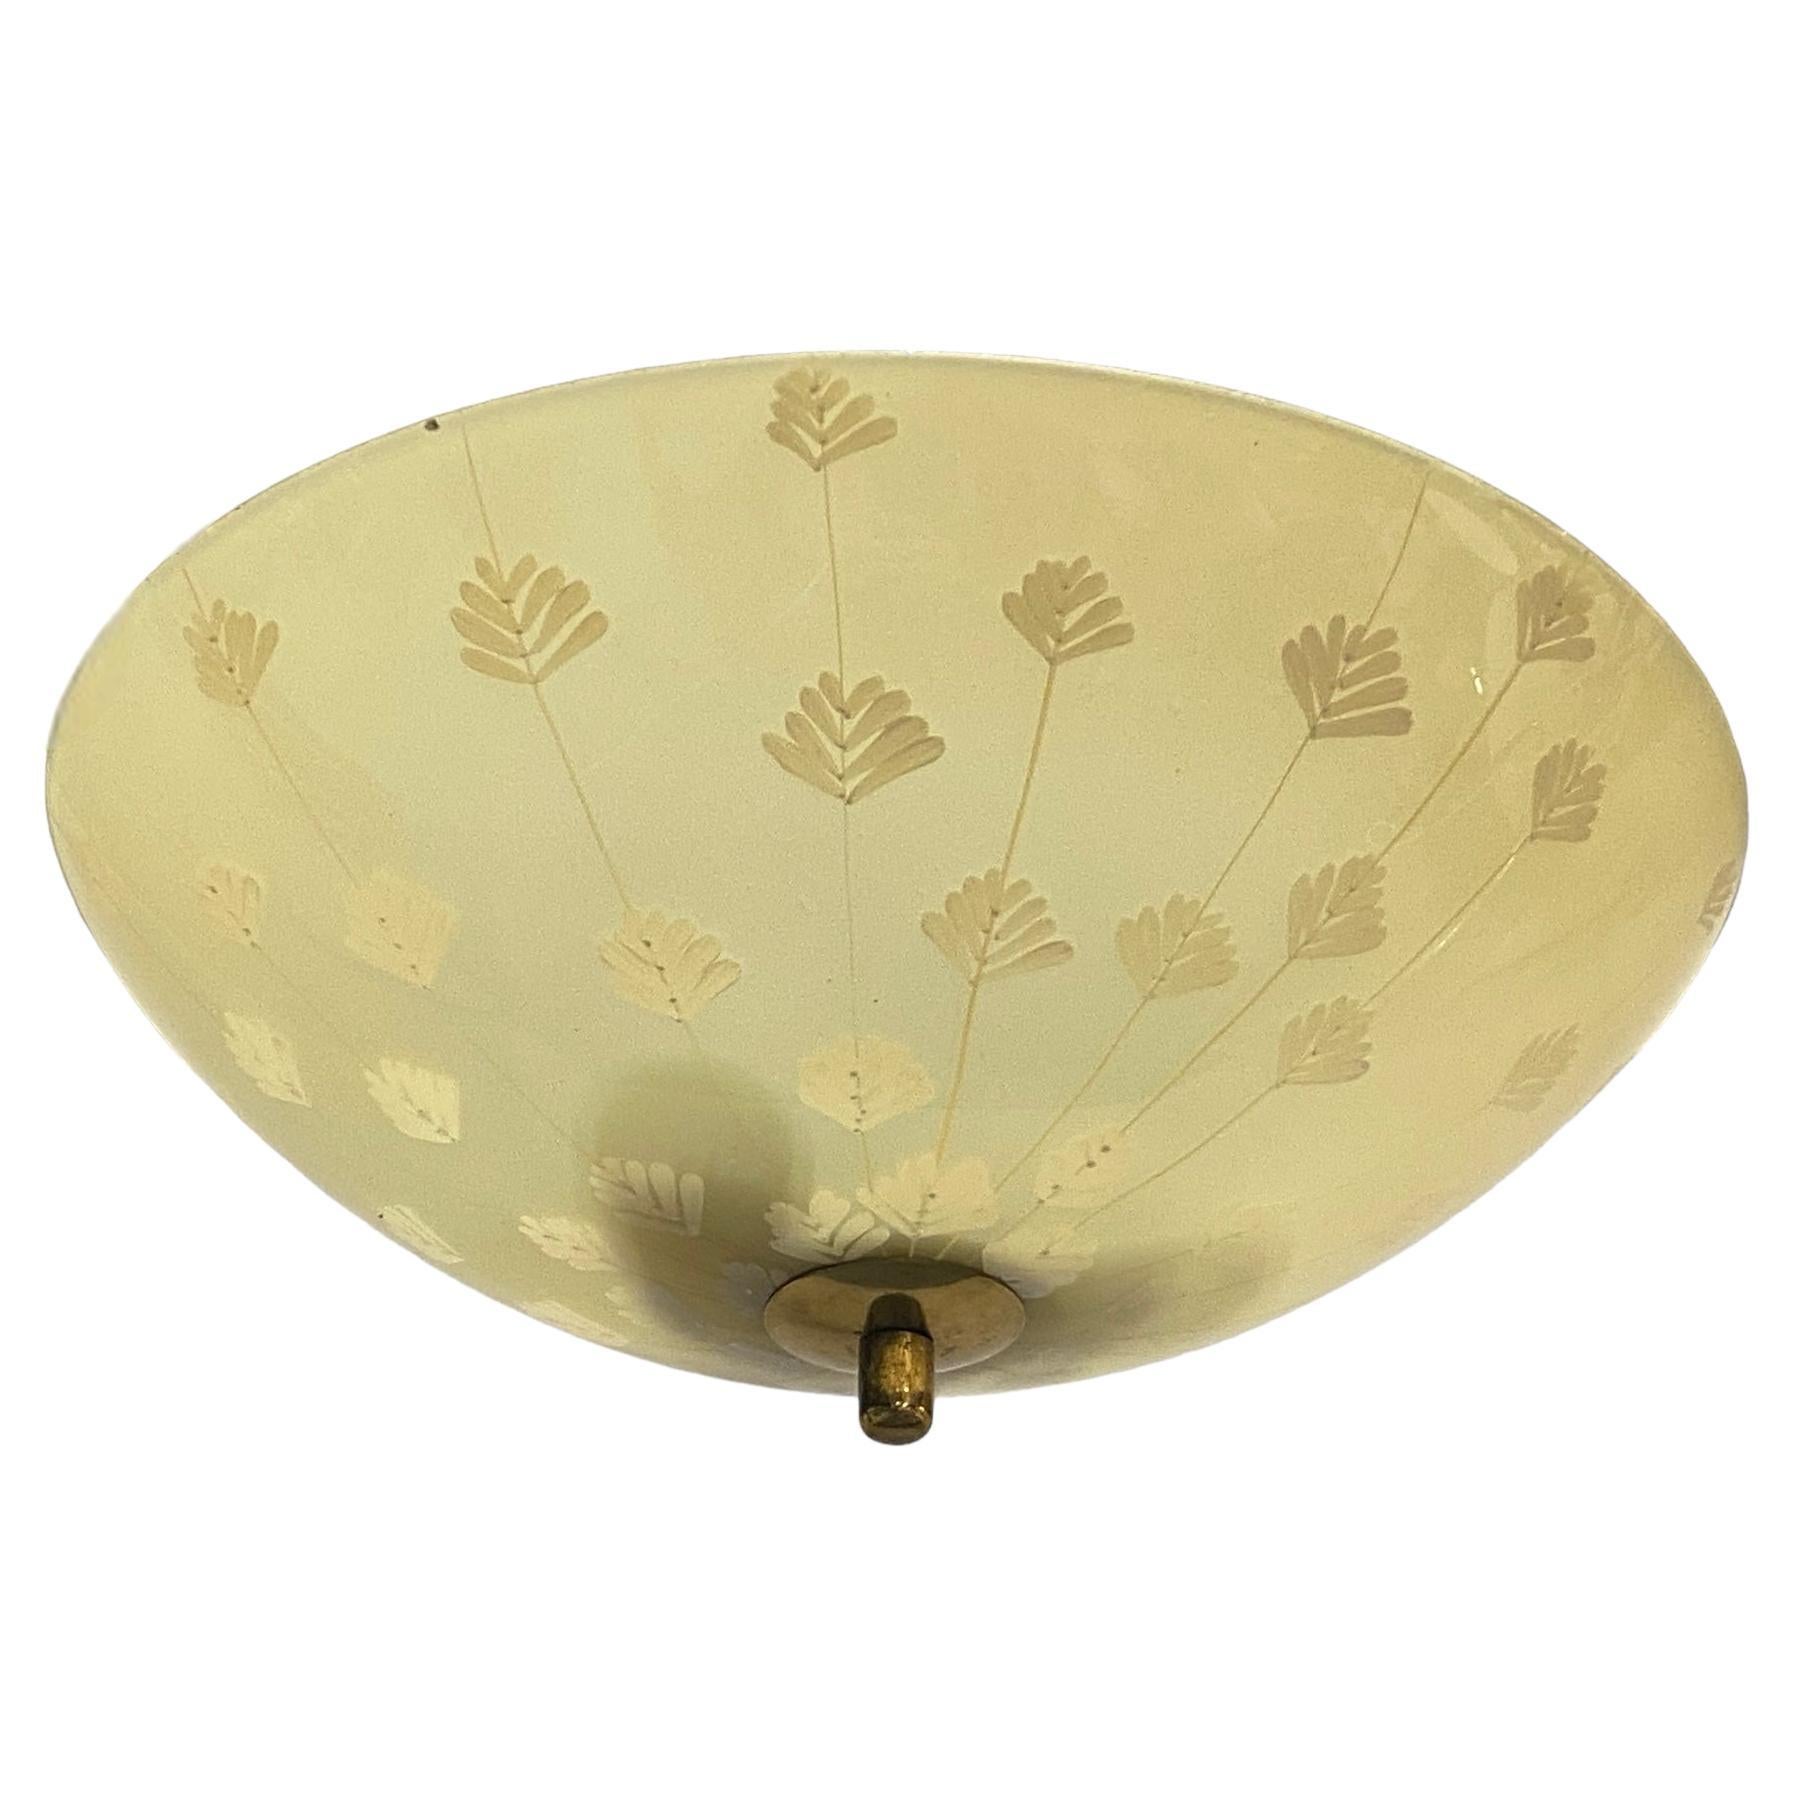 Lisa Johansson-Papé Hand-Painted Ceiling Lamp, Orno 1950s For Sale